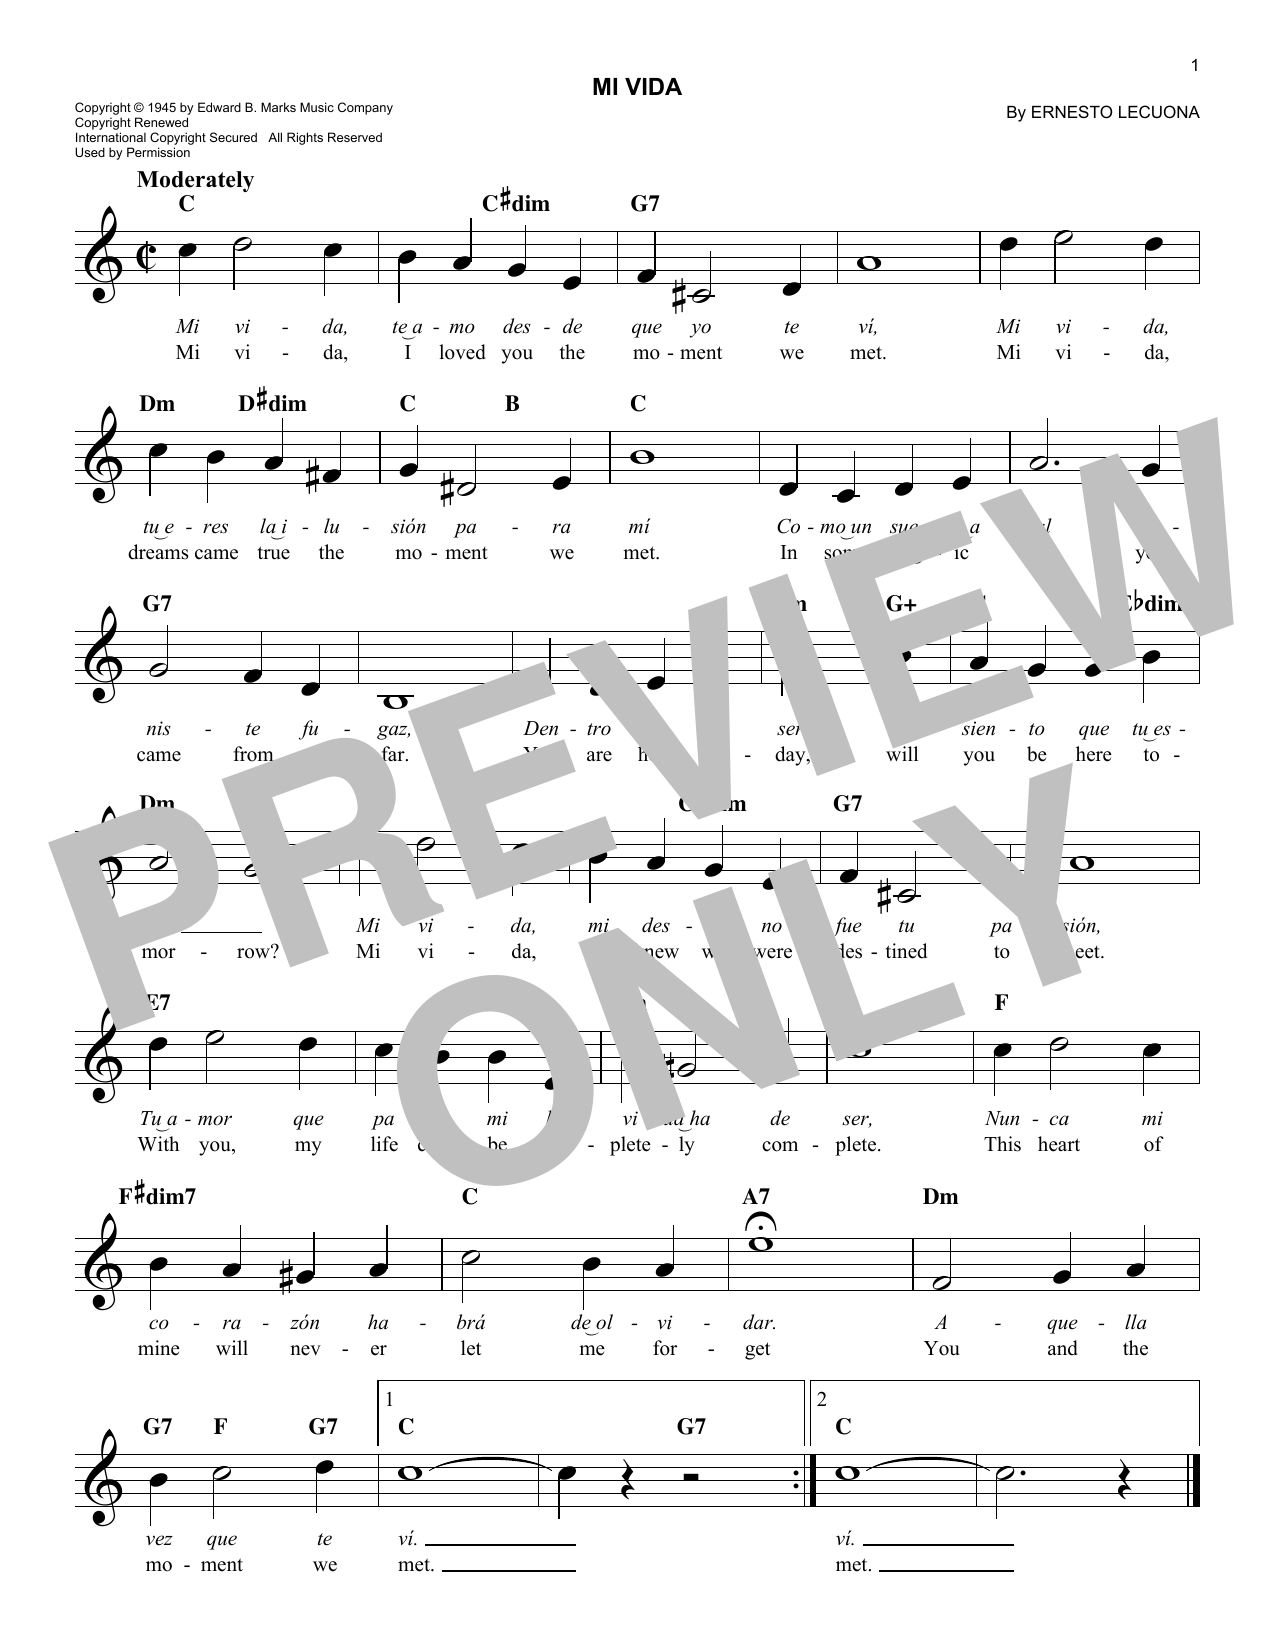 Ernesto Lecuona Mi Vida Sheet Music Notes & Chords for Piano, Vocal & Guitar Chords (Right-Hand Melody) - Download or Print PDF